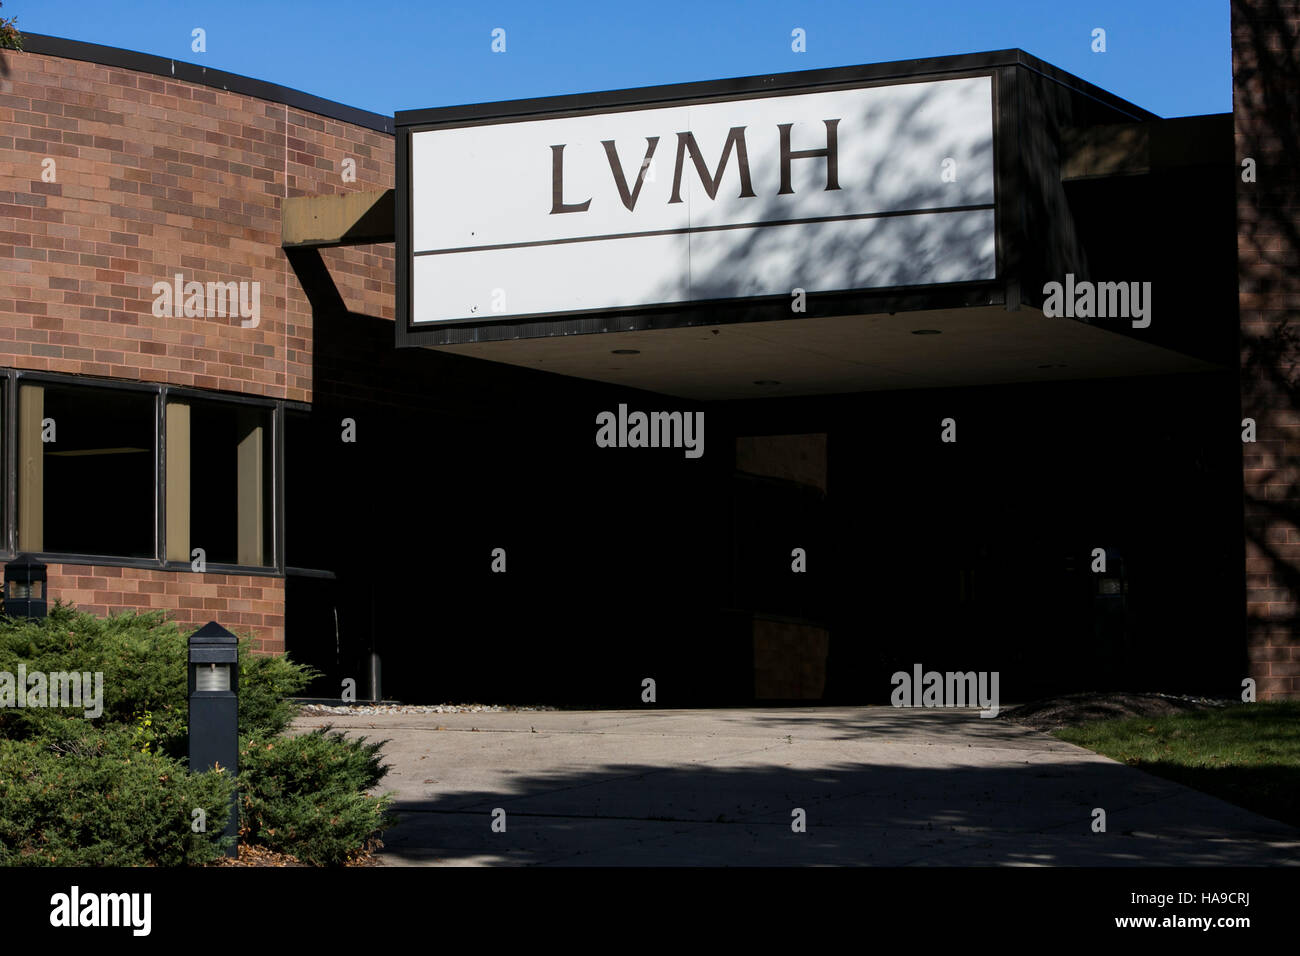 1,292 Lvmh Images, Stock Photos, 3D objects, & Vectors